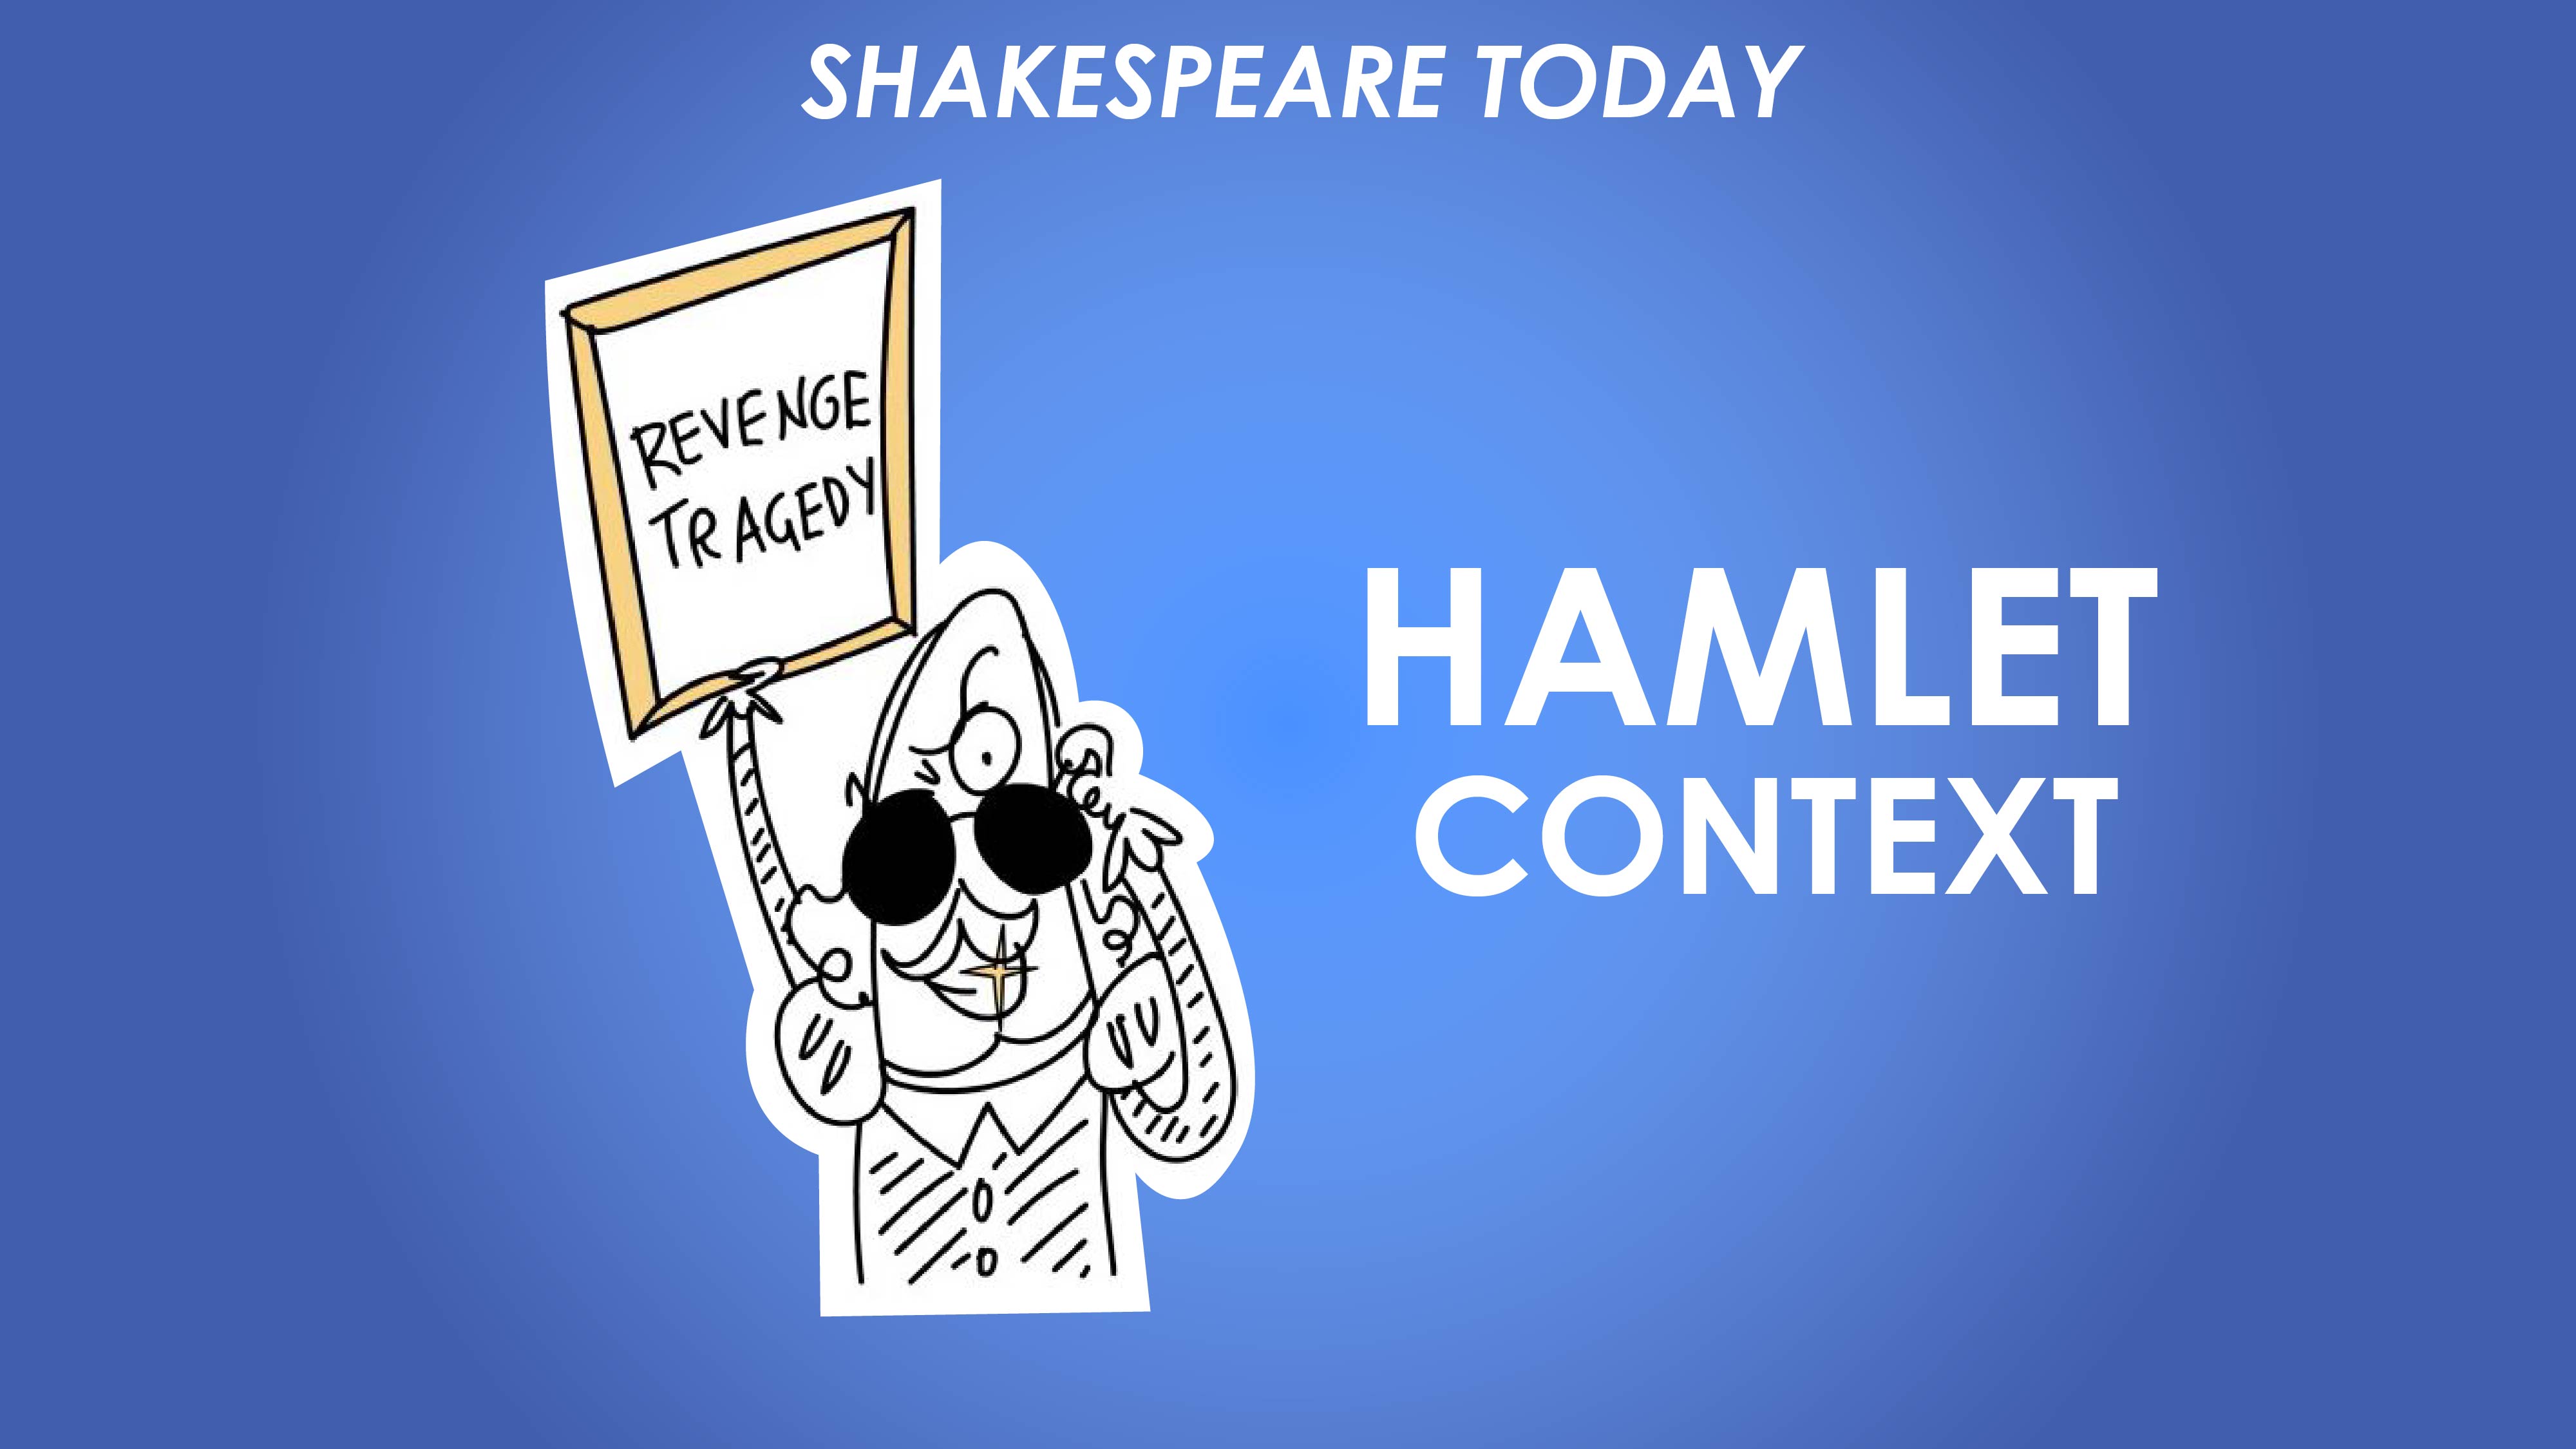 Hamlet Context - Shakespeare Today Series